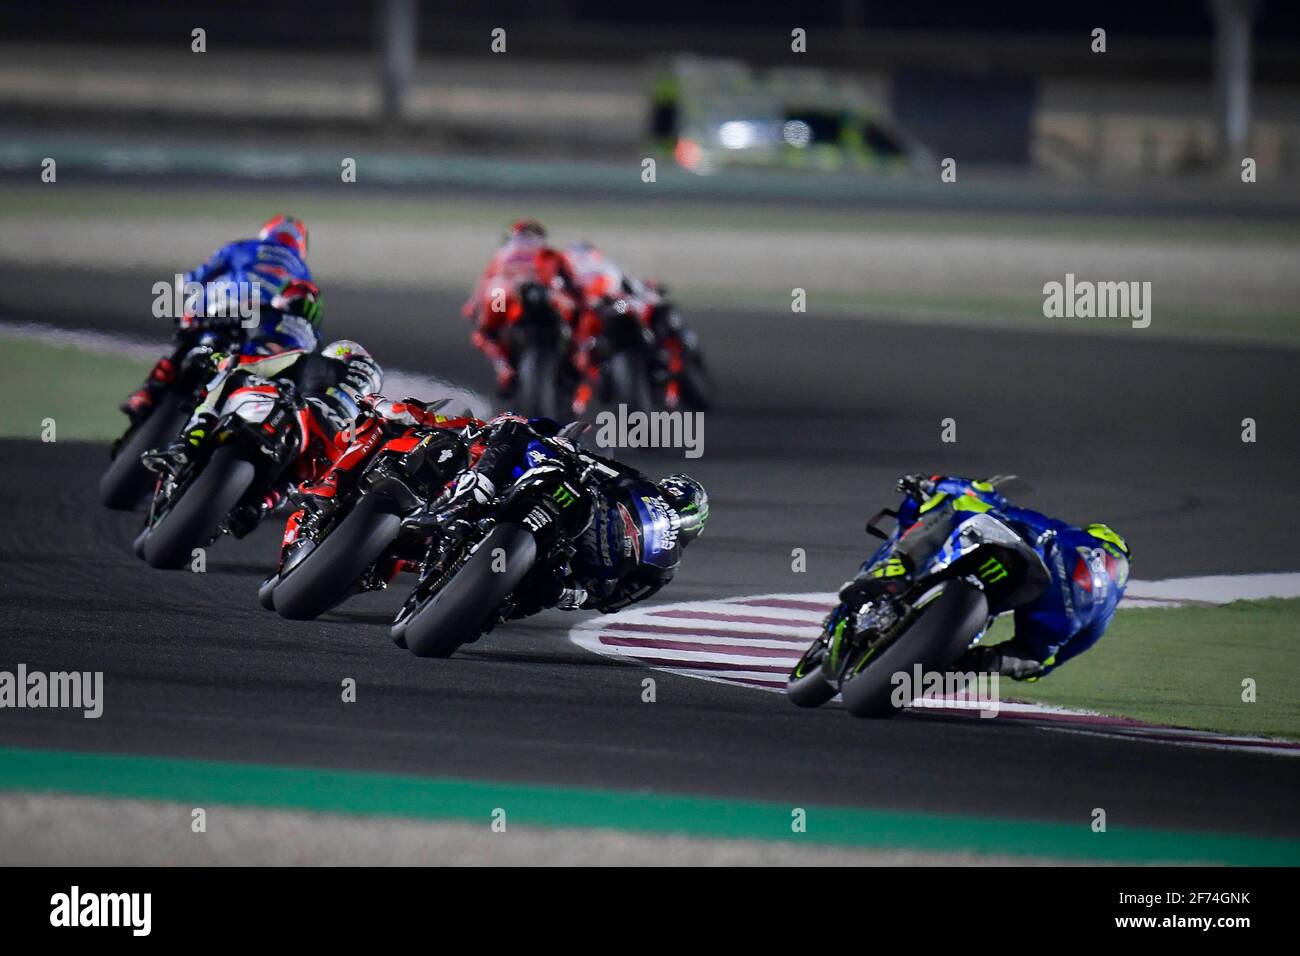 Races at MotoGP TISSOT Grand Prix of Doha underway at Losail International  Circuit, Qatar. April 4, 2021 In picture: Carreras del Gran Premio de MotoGP  TISSOT de Doha en el Circuito Internacional